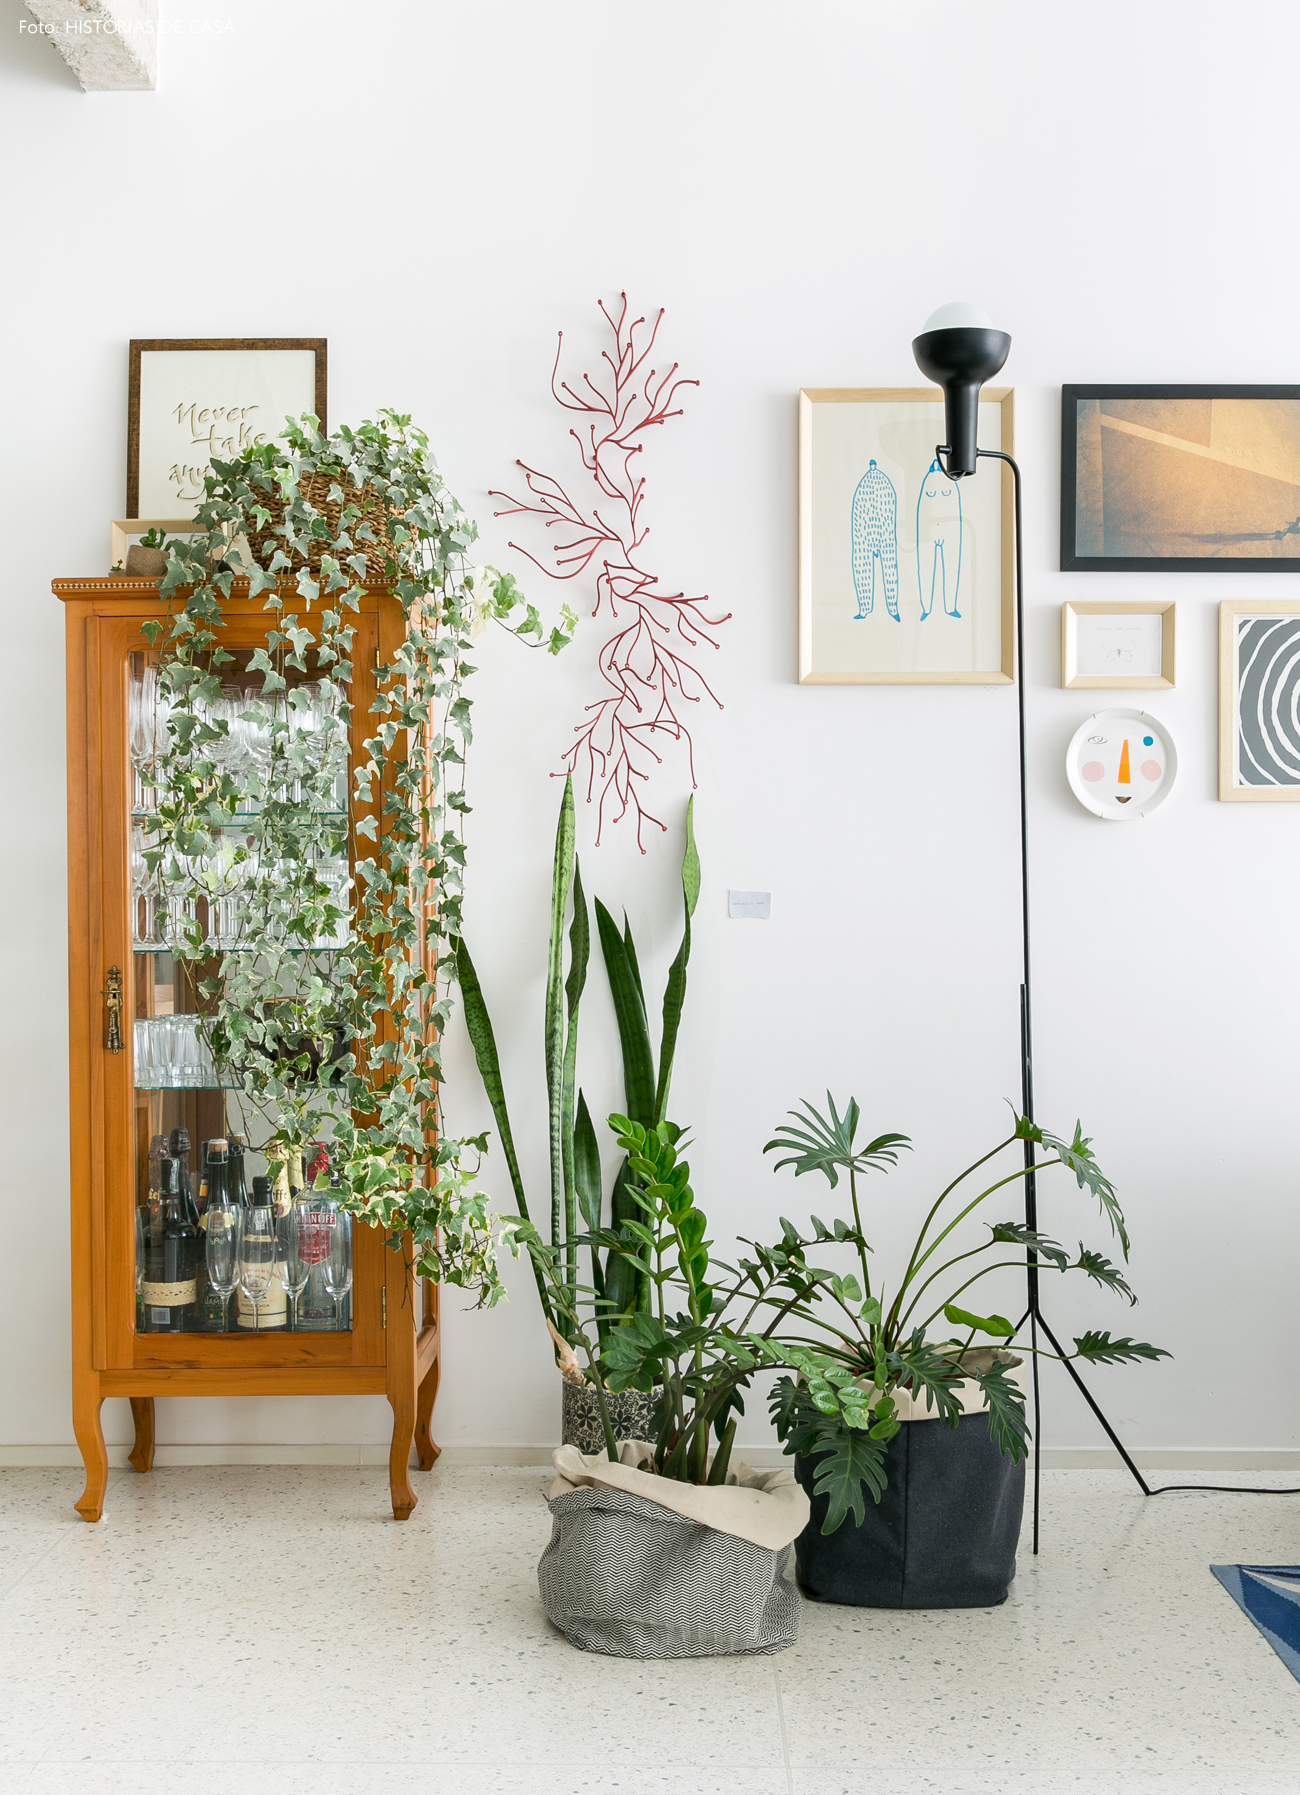 07-decoracao-apartamento-cristaleira-vintage-plantas-vasos